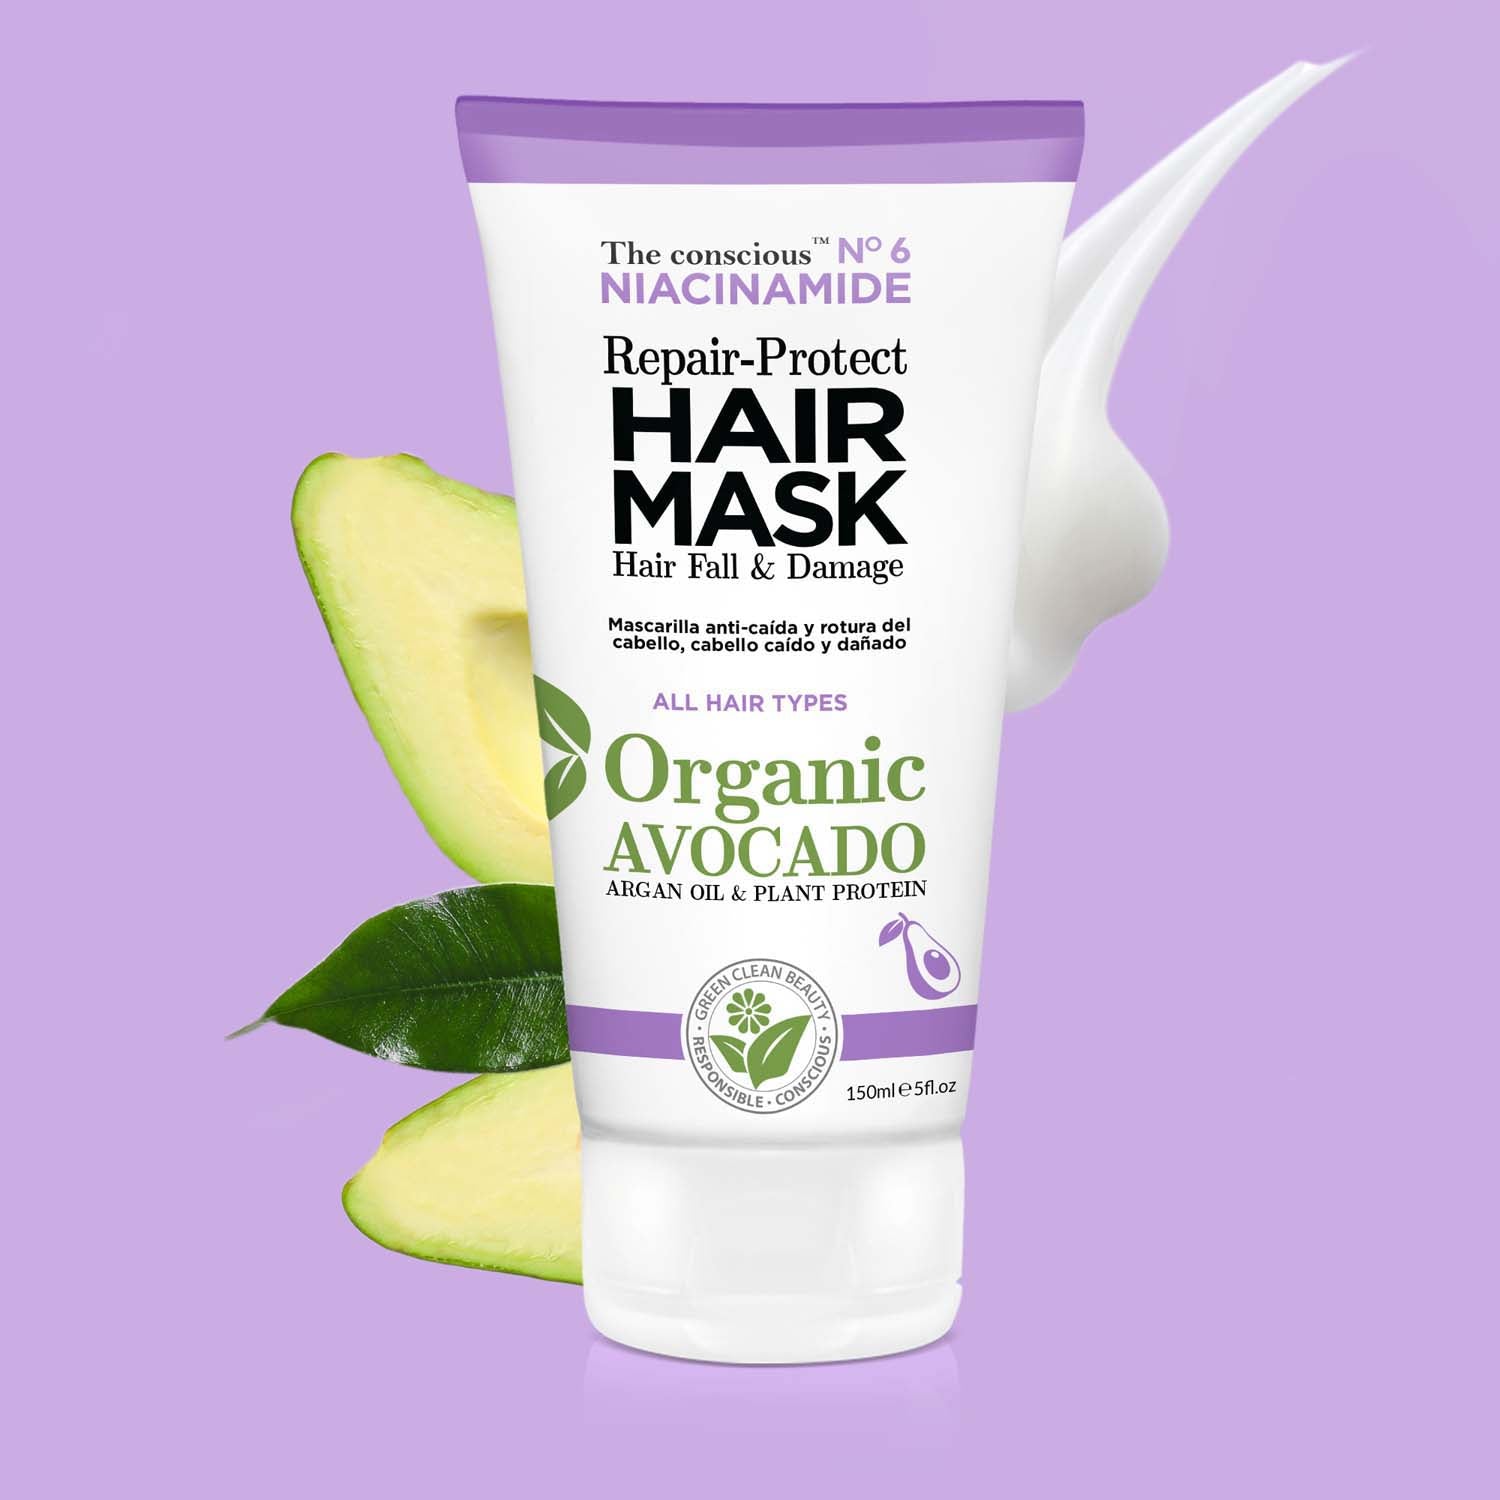 The conscious™ Niacinamide Repair-Protect Hair Mask Damage &amp; Hair Fall Organic Avocado